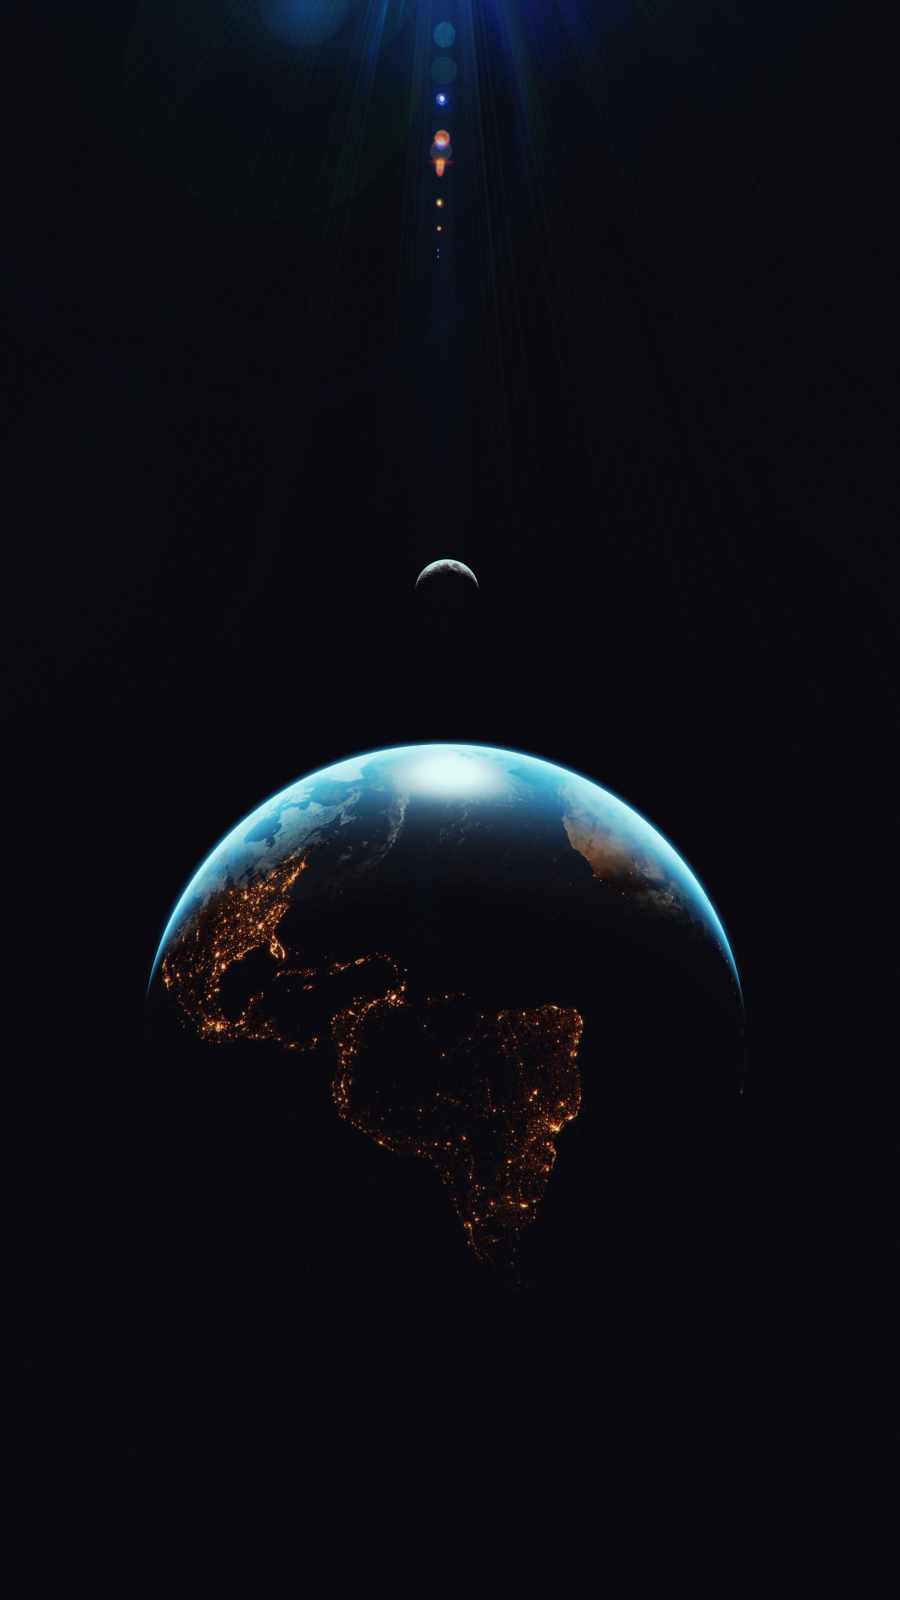 Earth In Dark IPhone Wallpaper - IPhone Wallpapers : iPhone Wallpapers